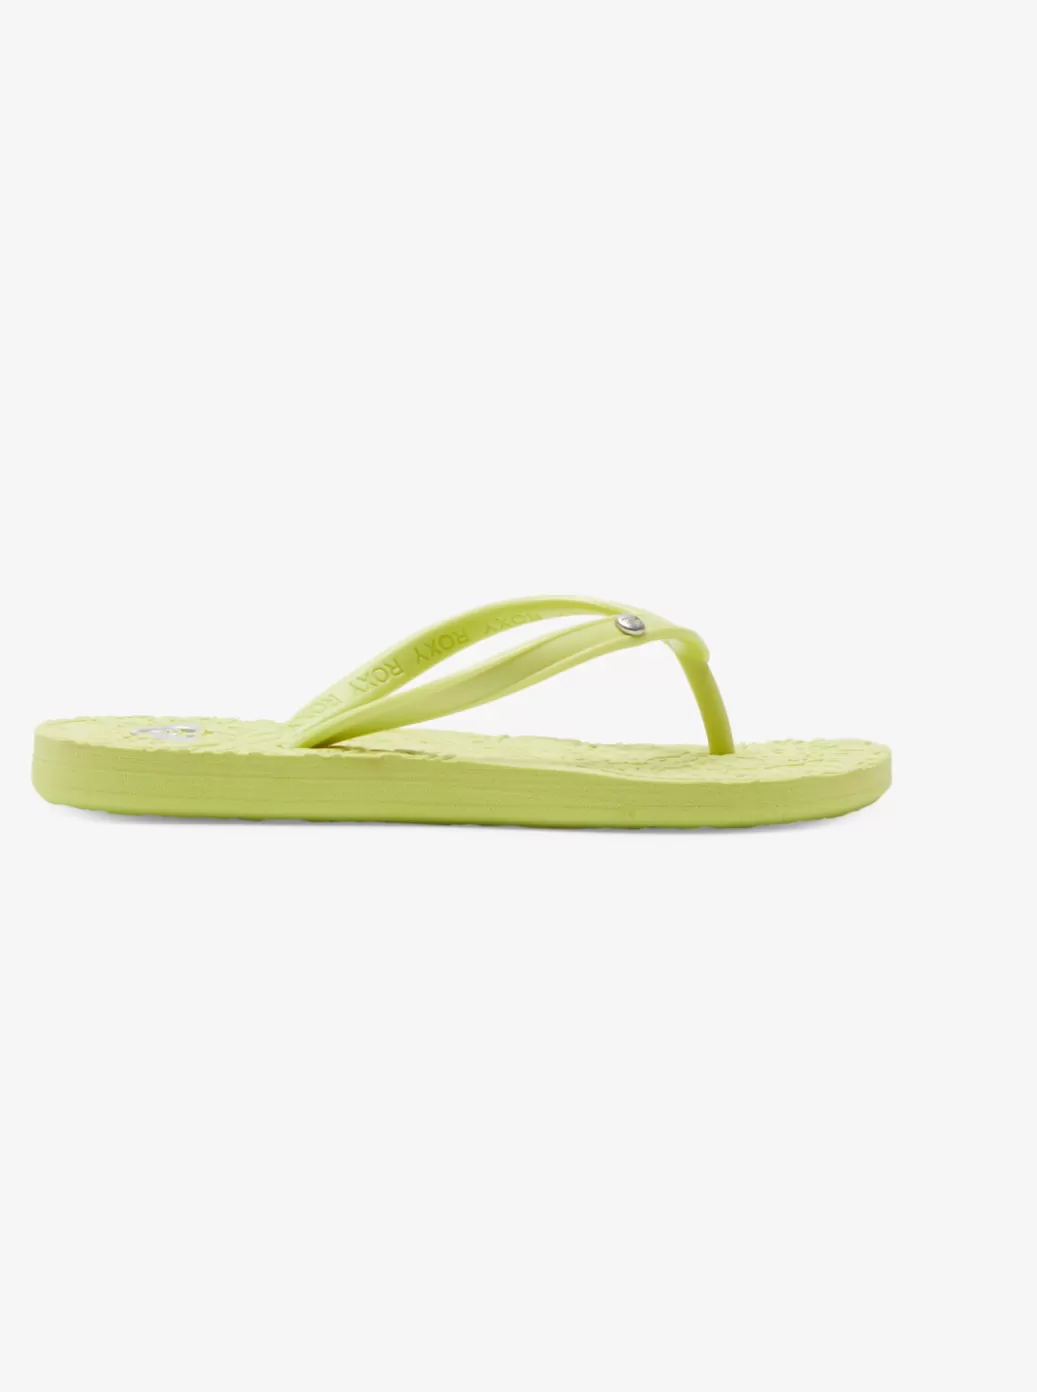 Shoes & Sandals | KIDS ROXY Girl's 4-16 Antilles Flip-Flops Lime Green